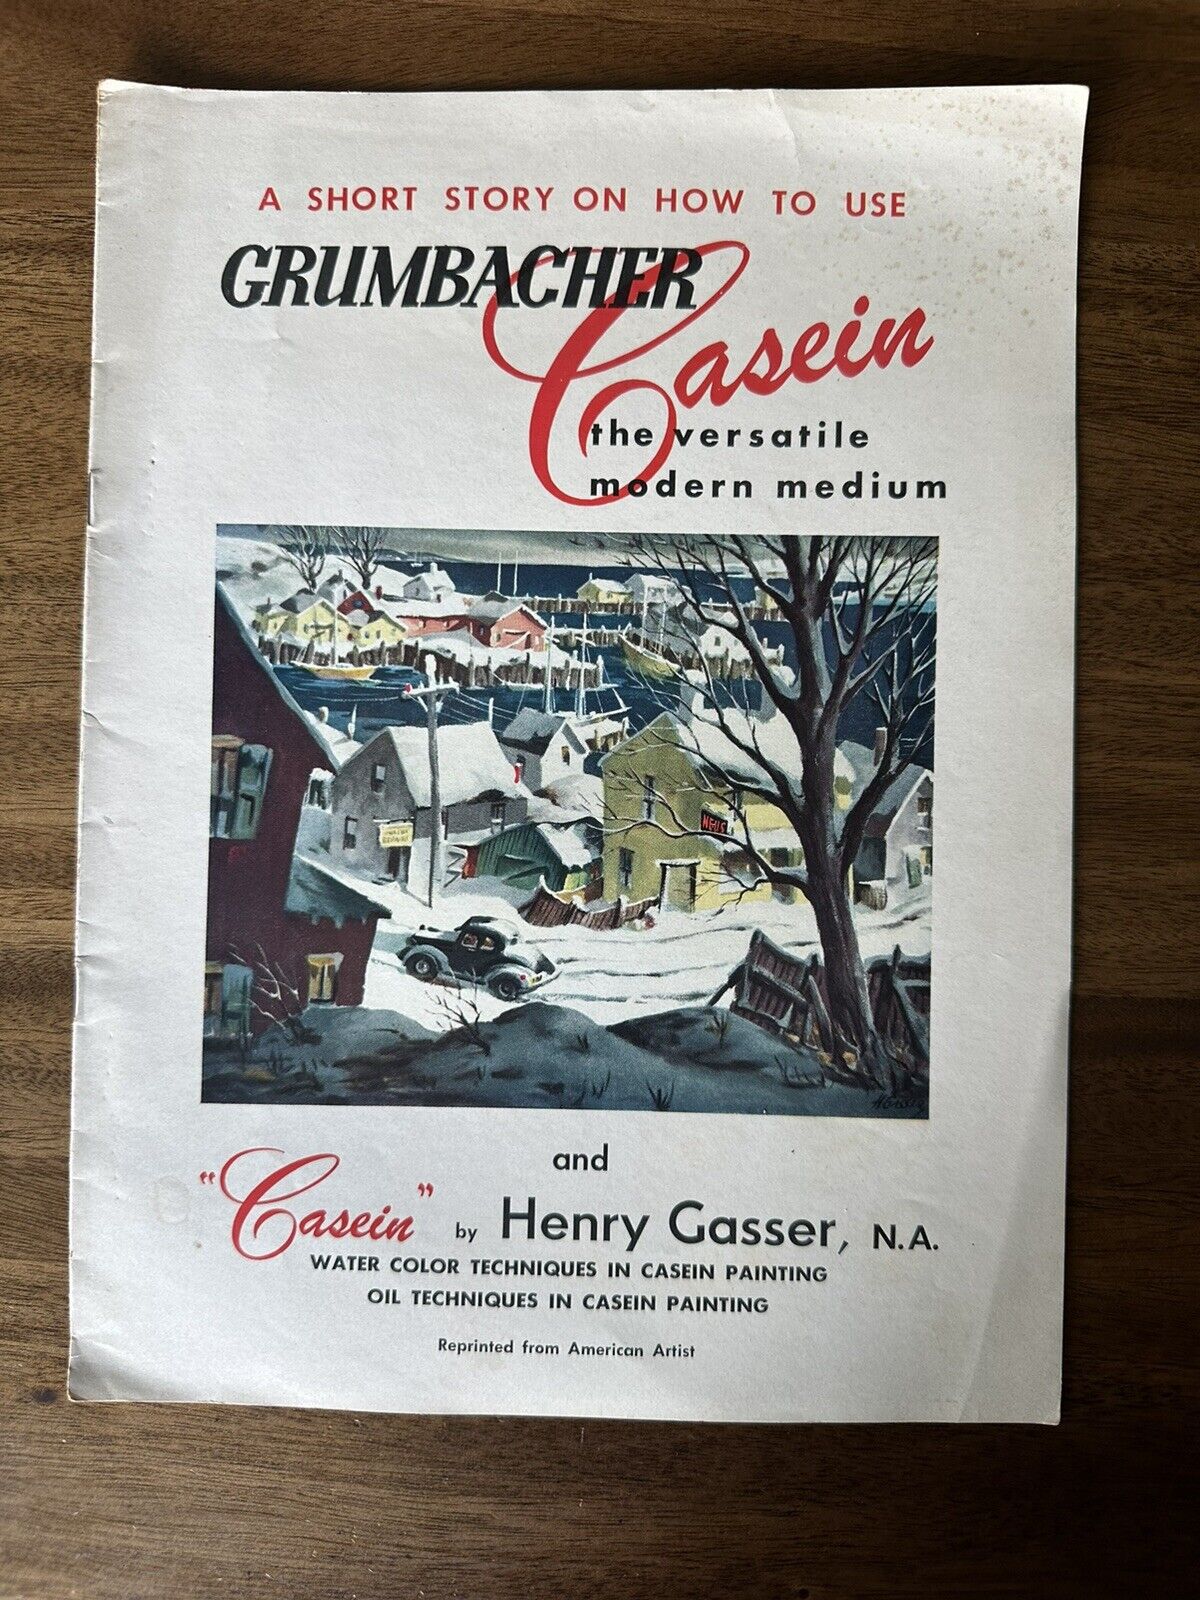 VTG 1957 Oil Painting & Water Color Techniques Grumbacher Casein Henry Gasser